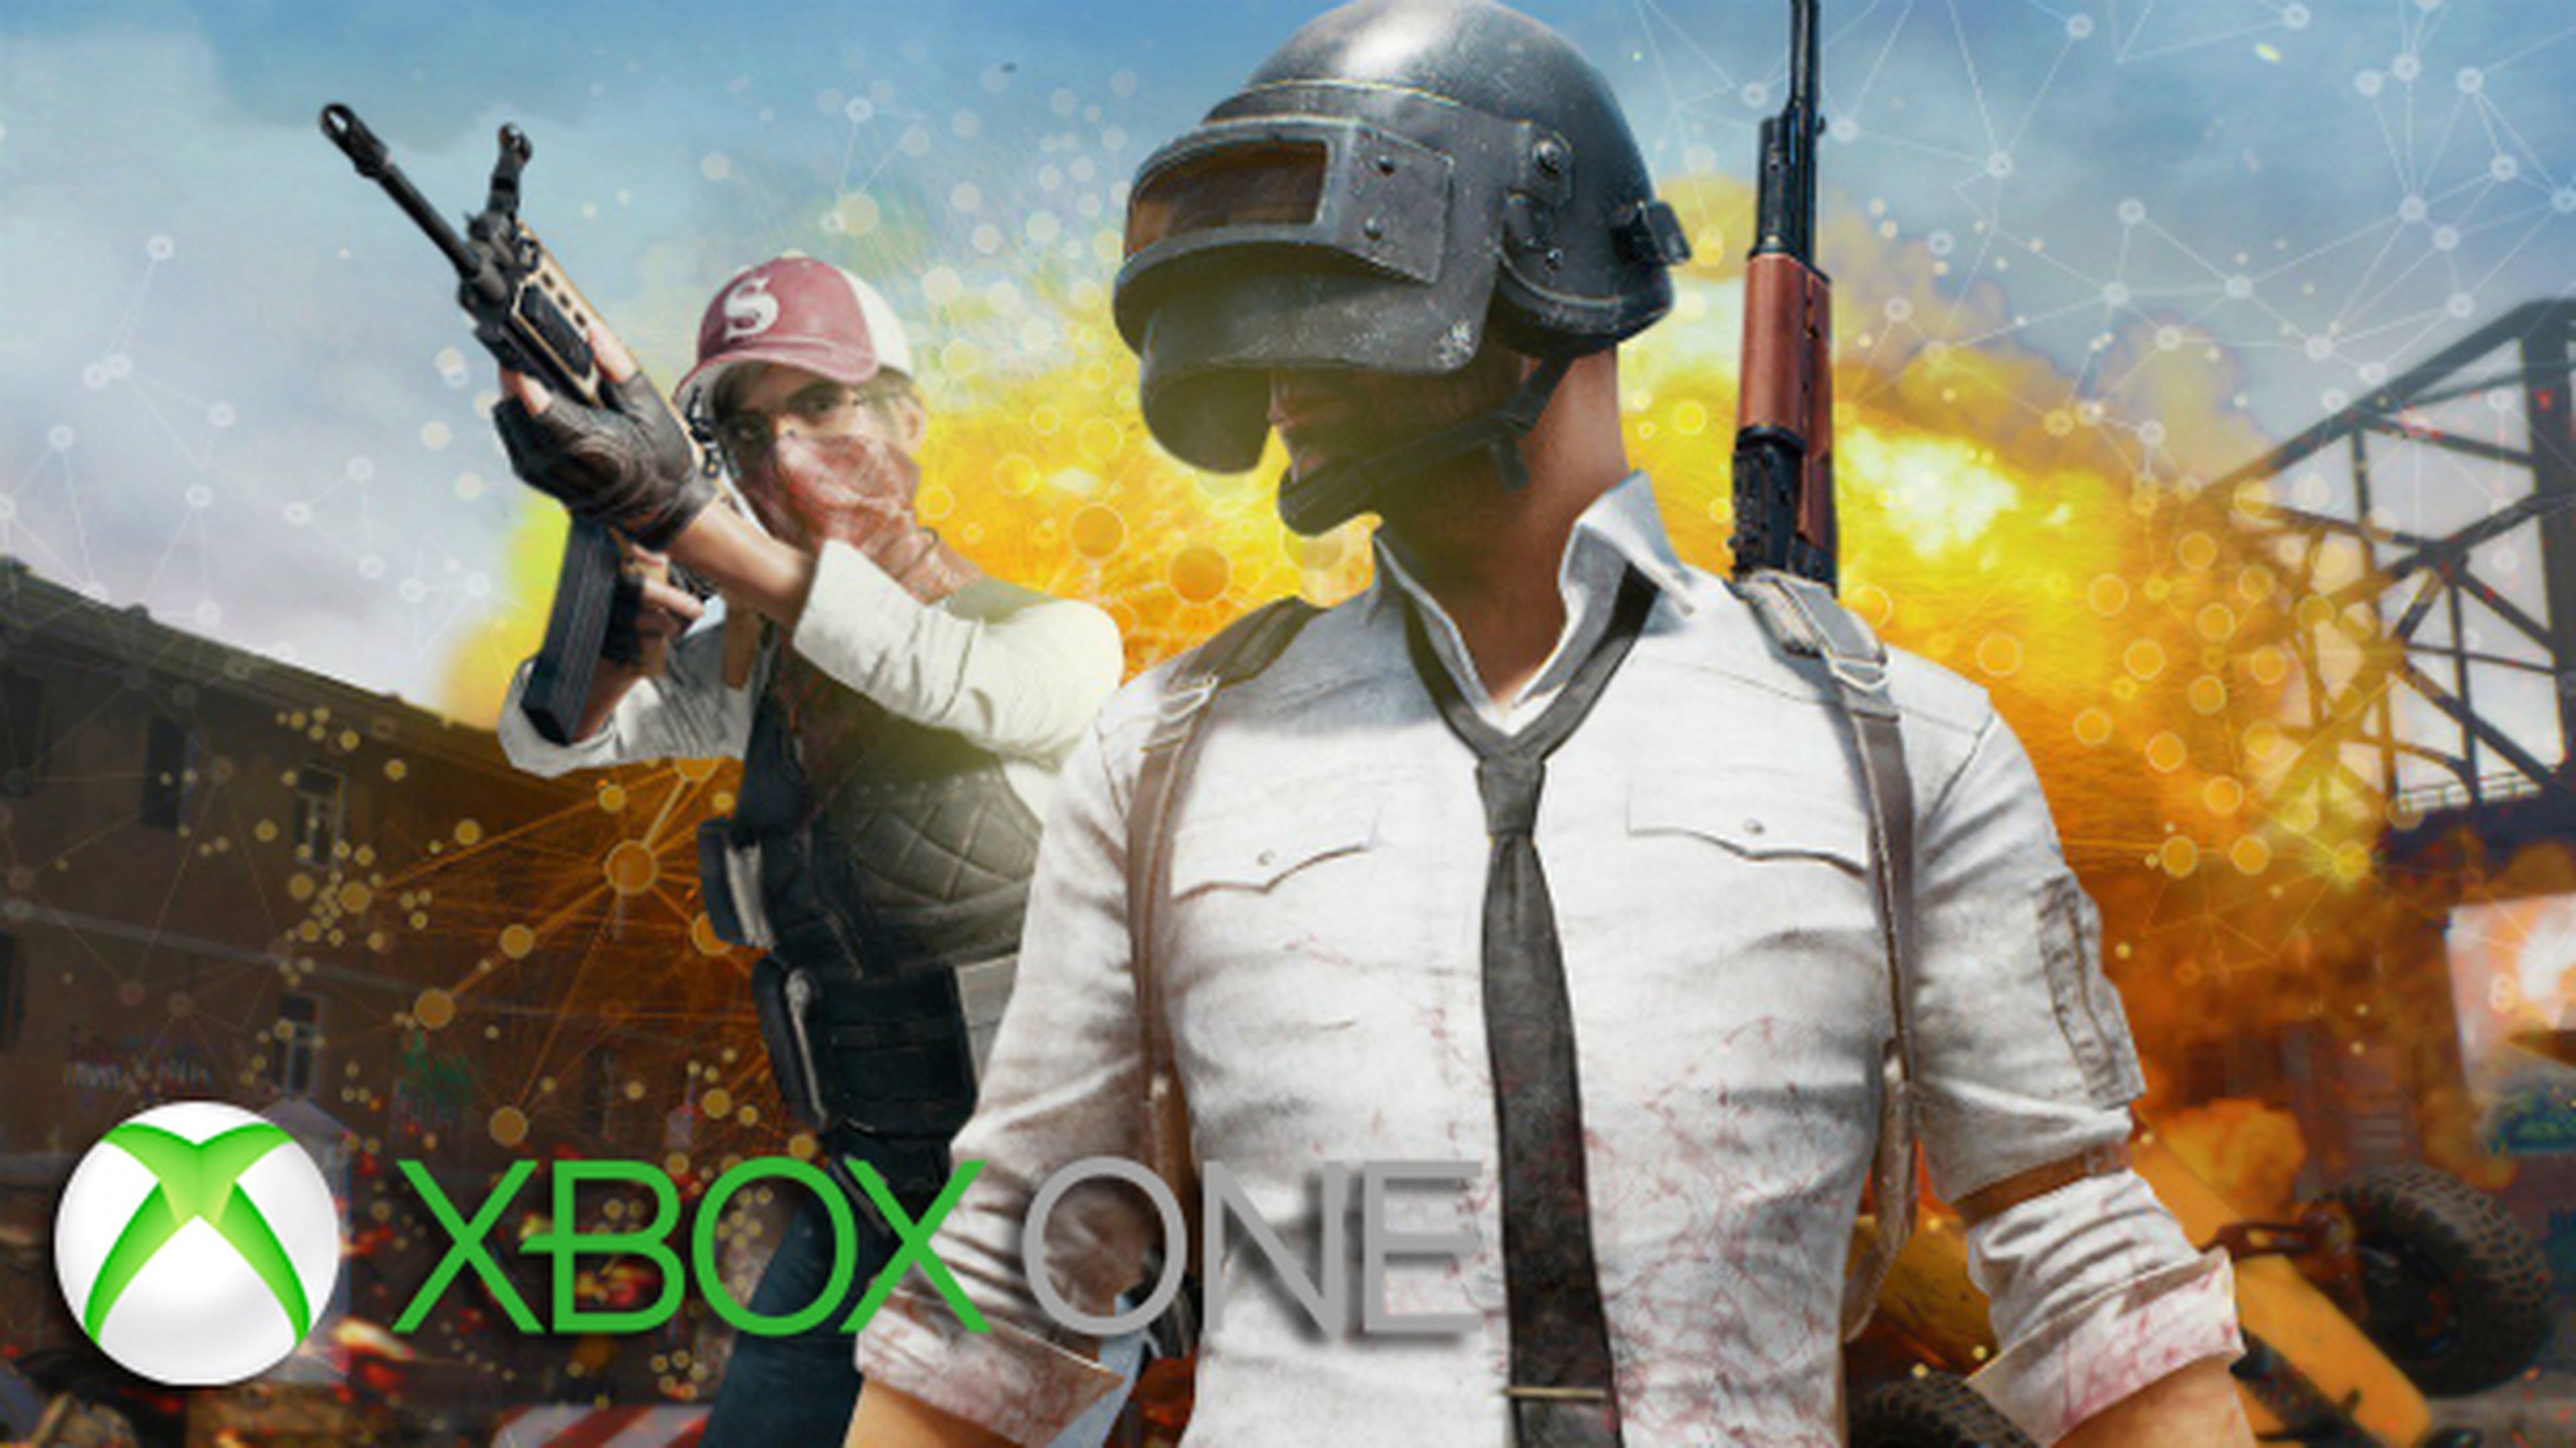 PlayerUnknown's Battlegrounds Xbox One